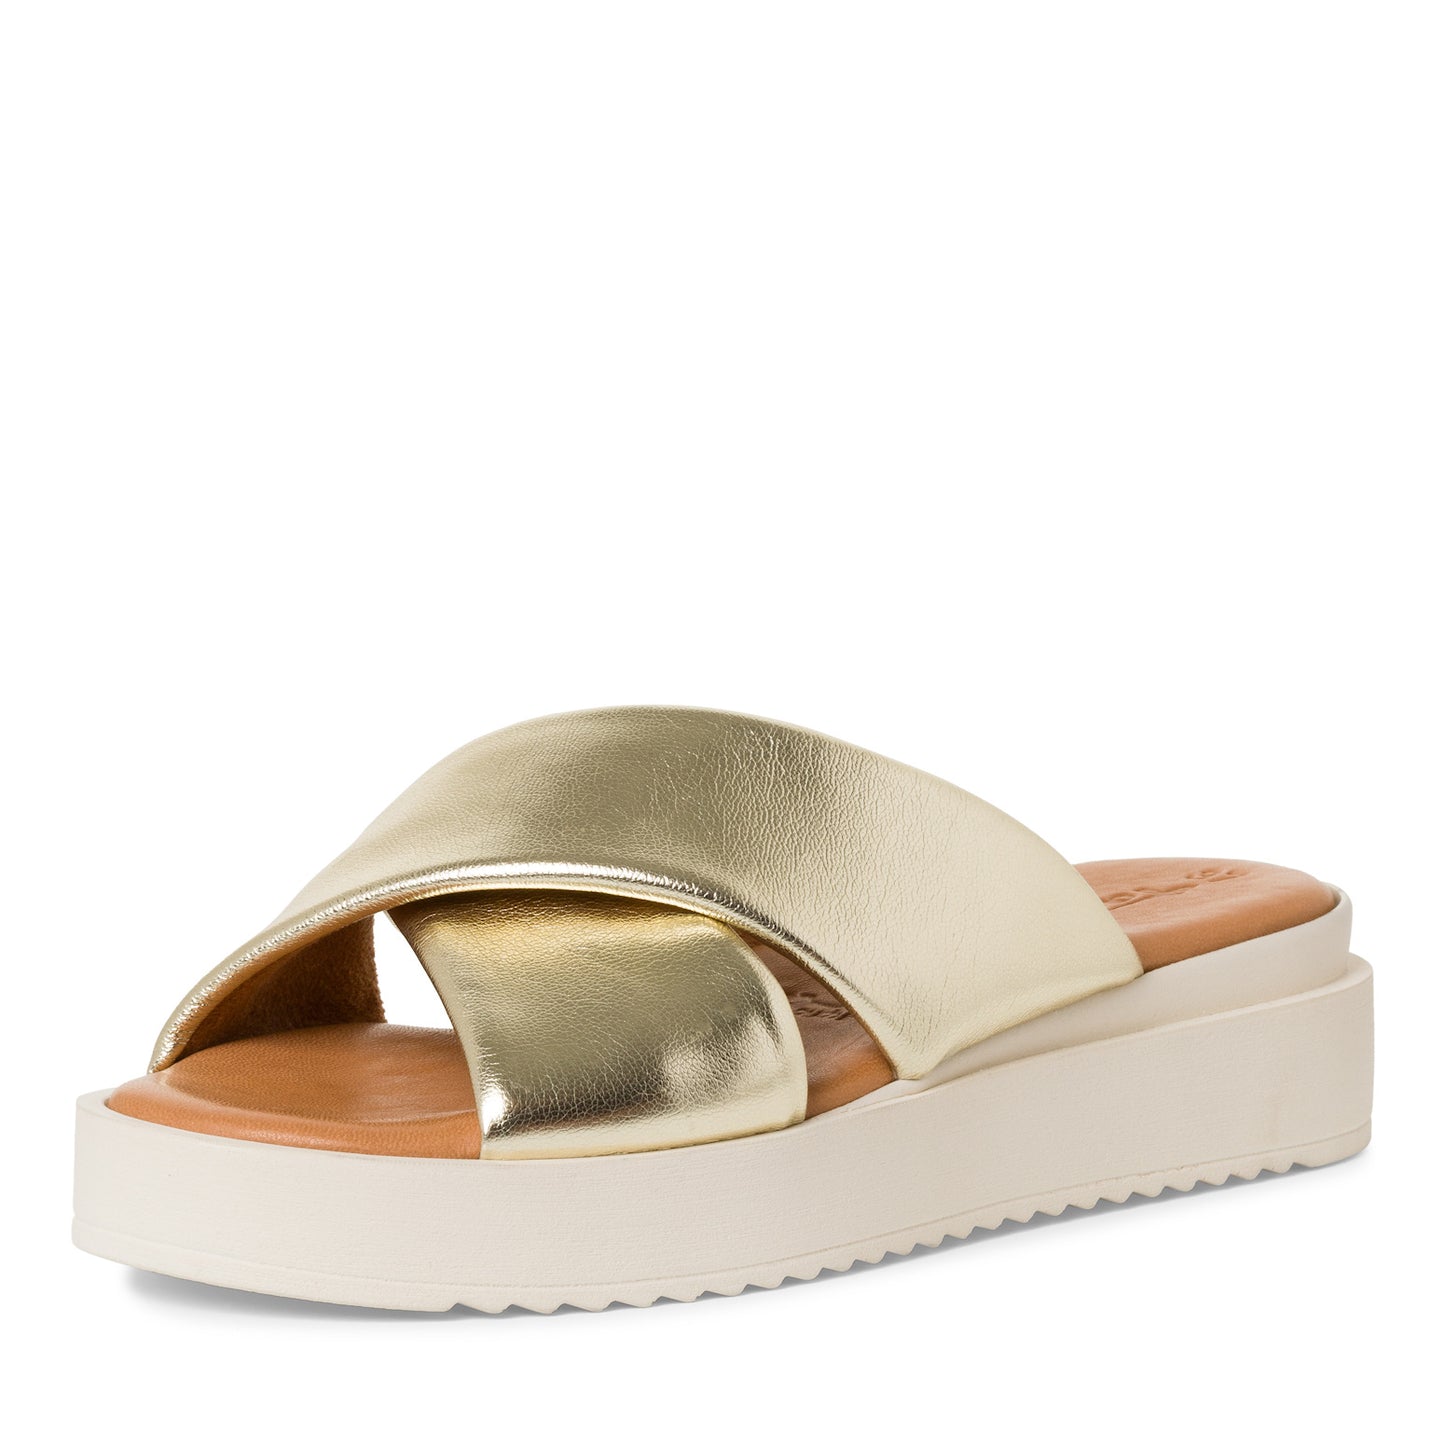 Tamaris - Ladies Shoes Sandals Light Gold (2199)